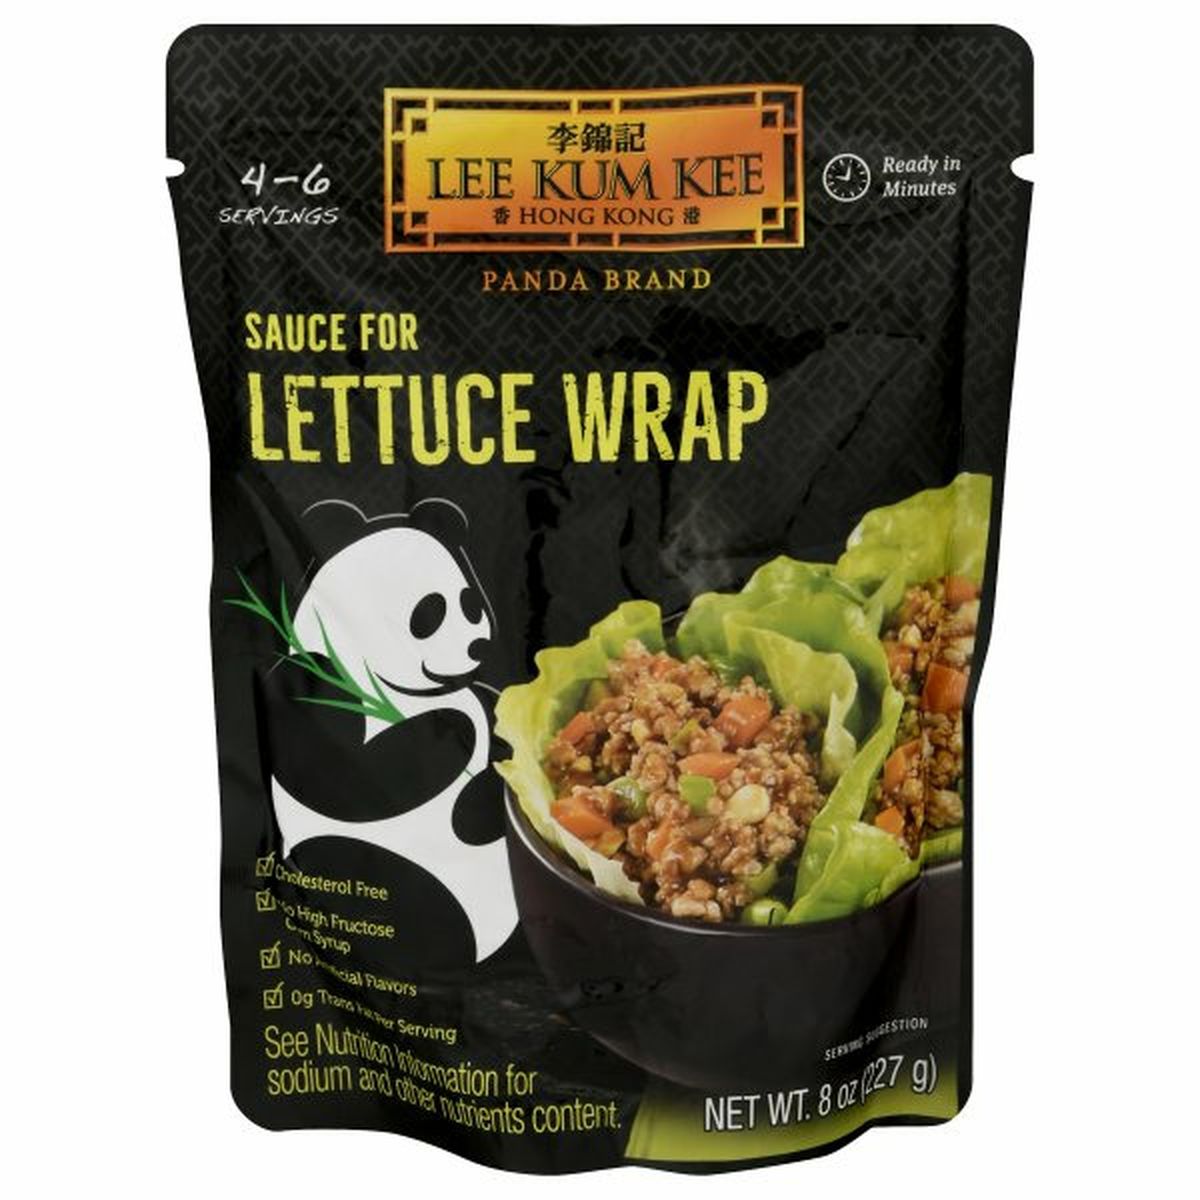 Calories in Lee Kum Kee Panda Brand Sauce for Lettuce Wrap